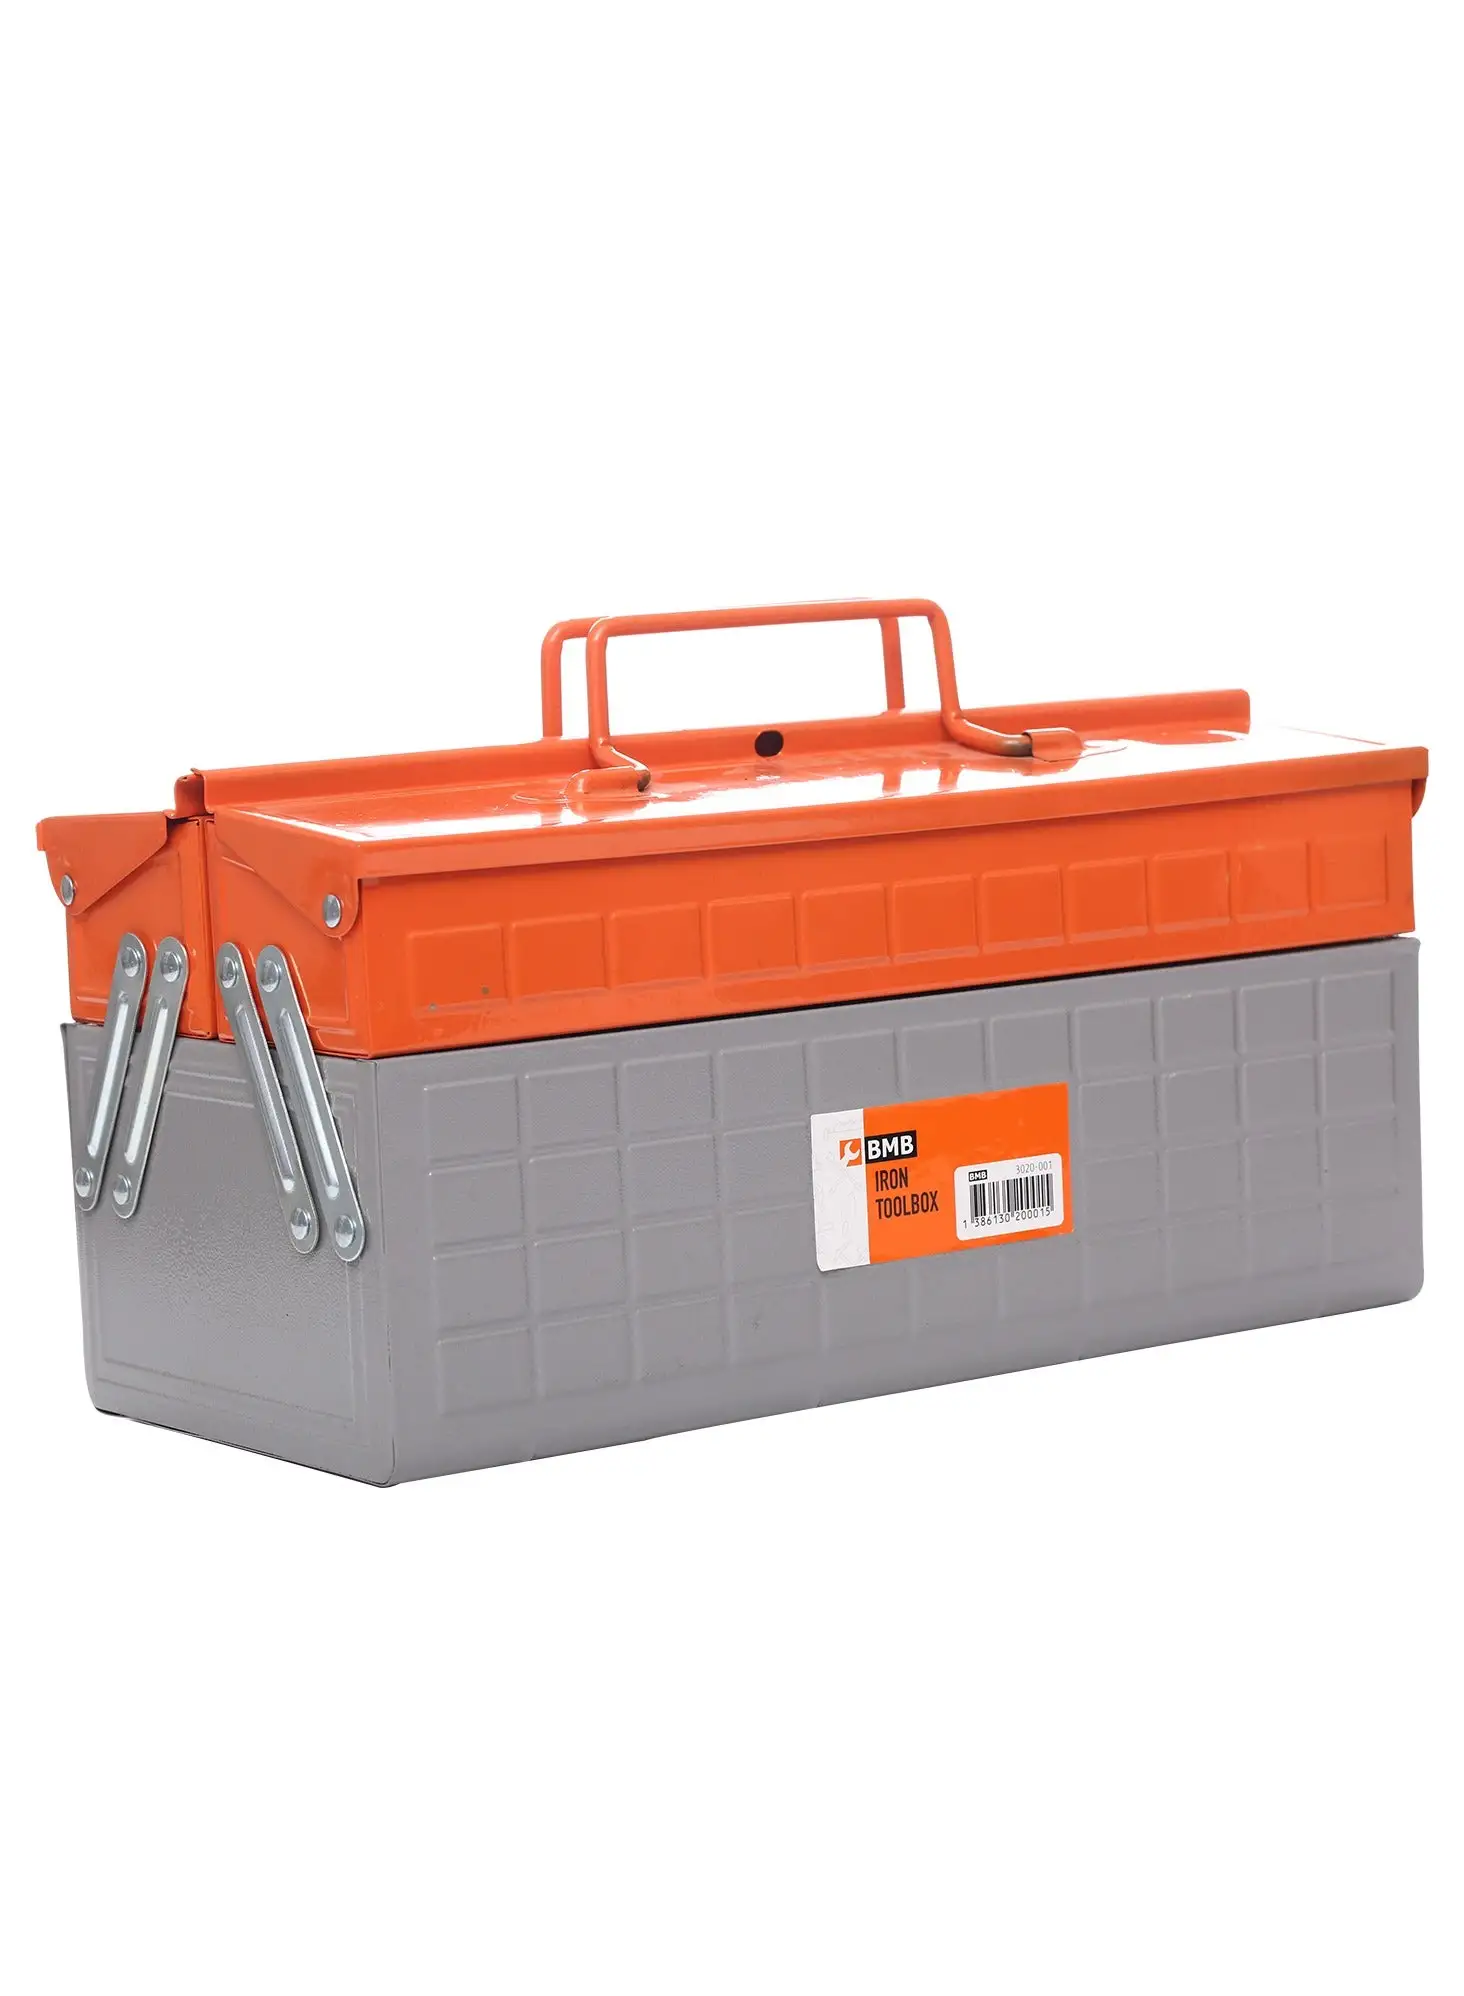 BMB tools Metal Toolbox 14 Inch | Iron Sheet Tool Box Red Metal Household Tool Storage